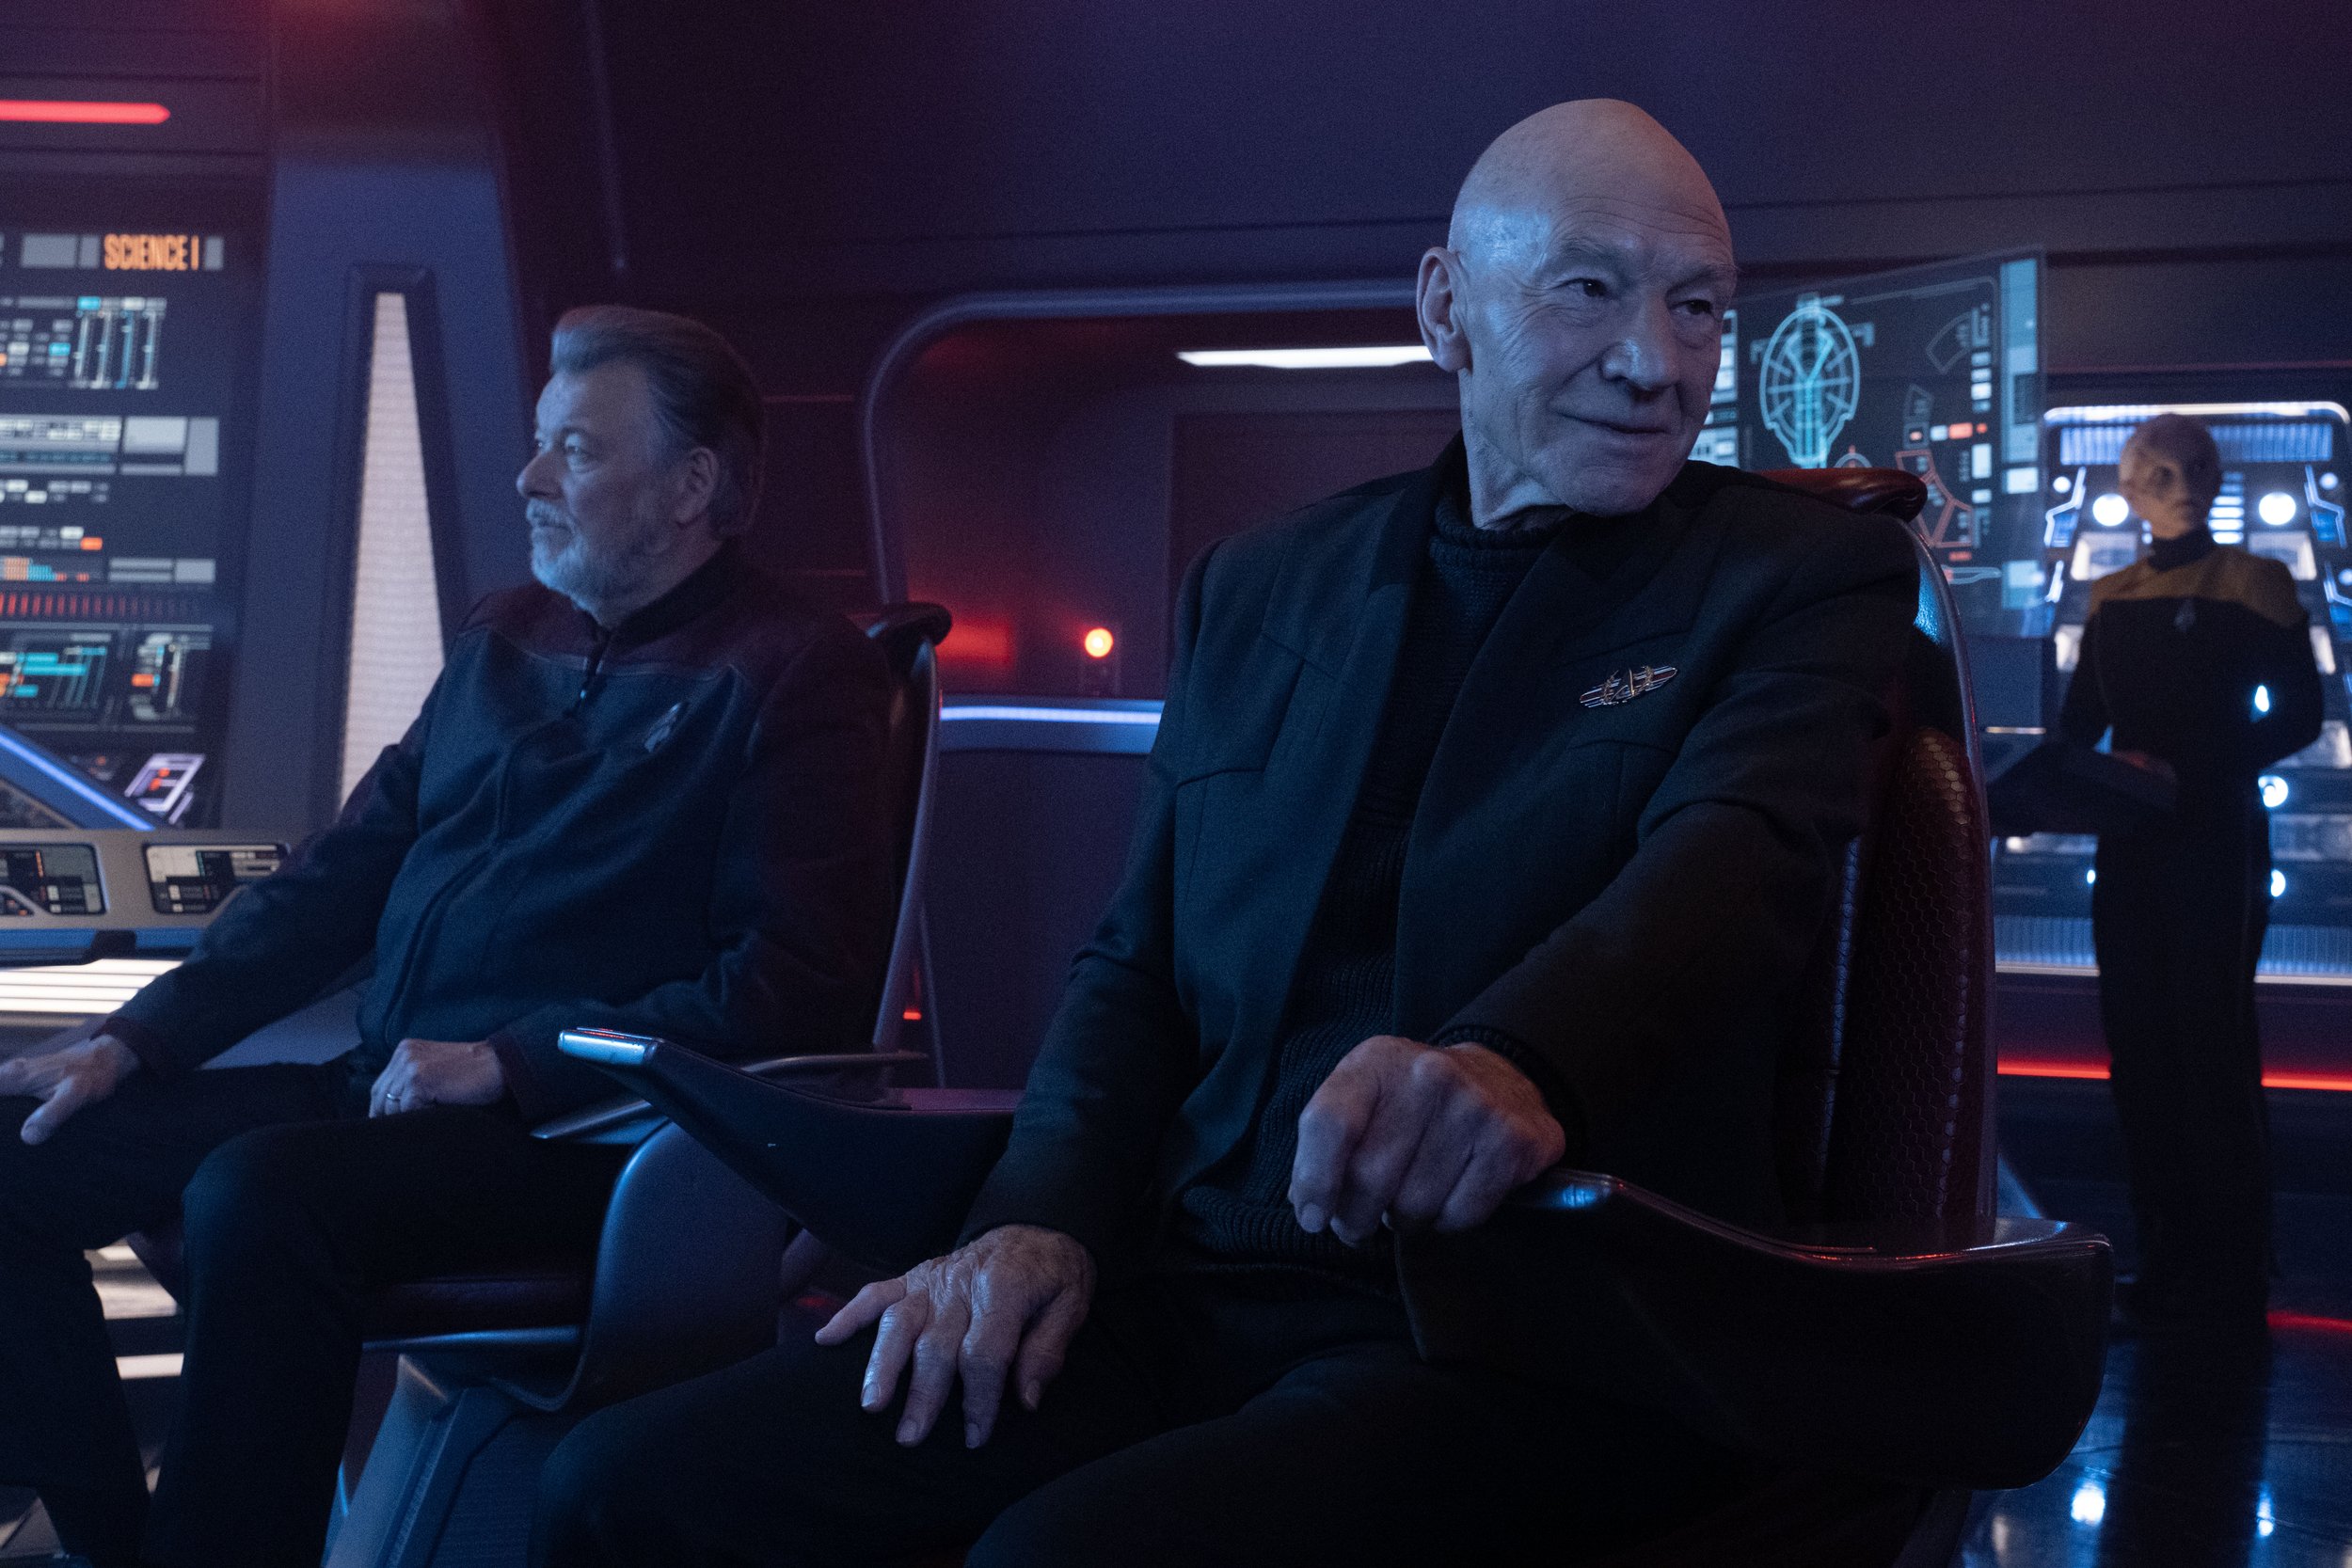   Jonathan Frakes  as Will Riker and  Patrick Stewart  as Picard.  Photo Credit: Trae Patton/Paramount+.  